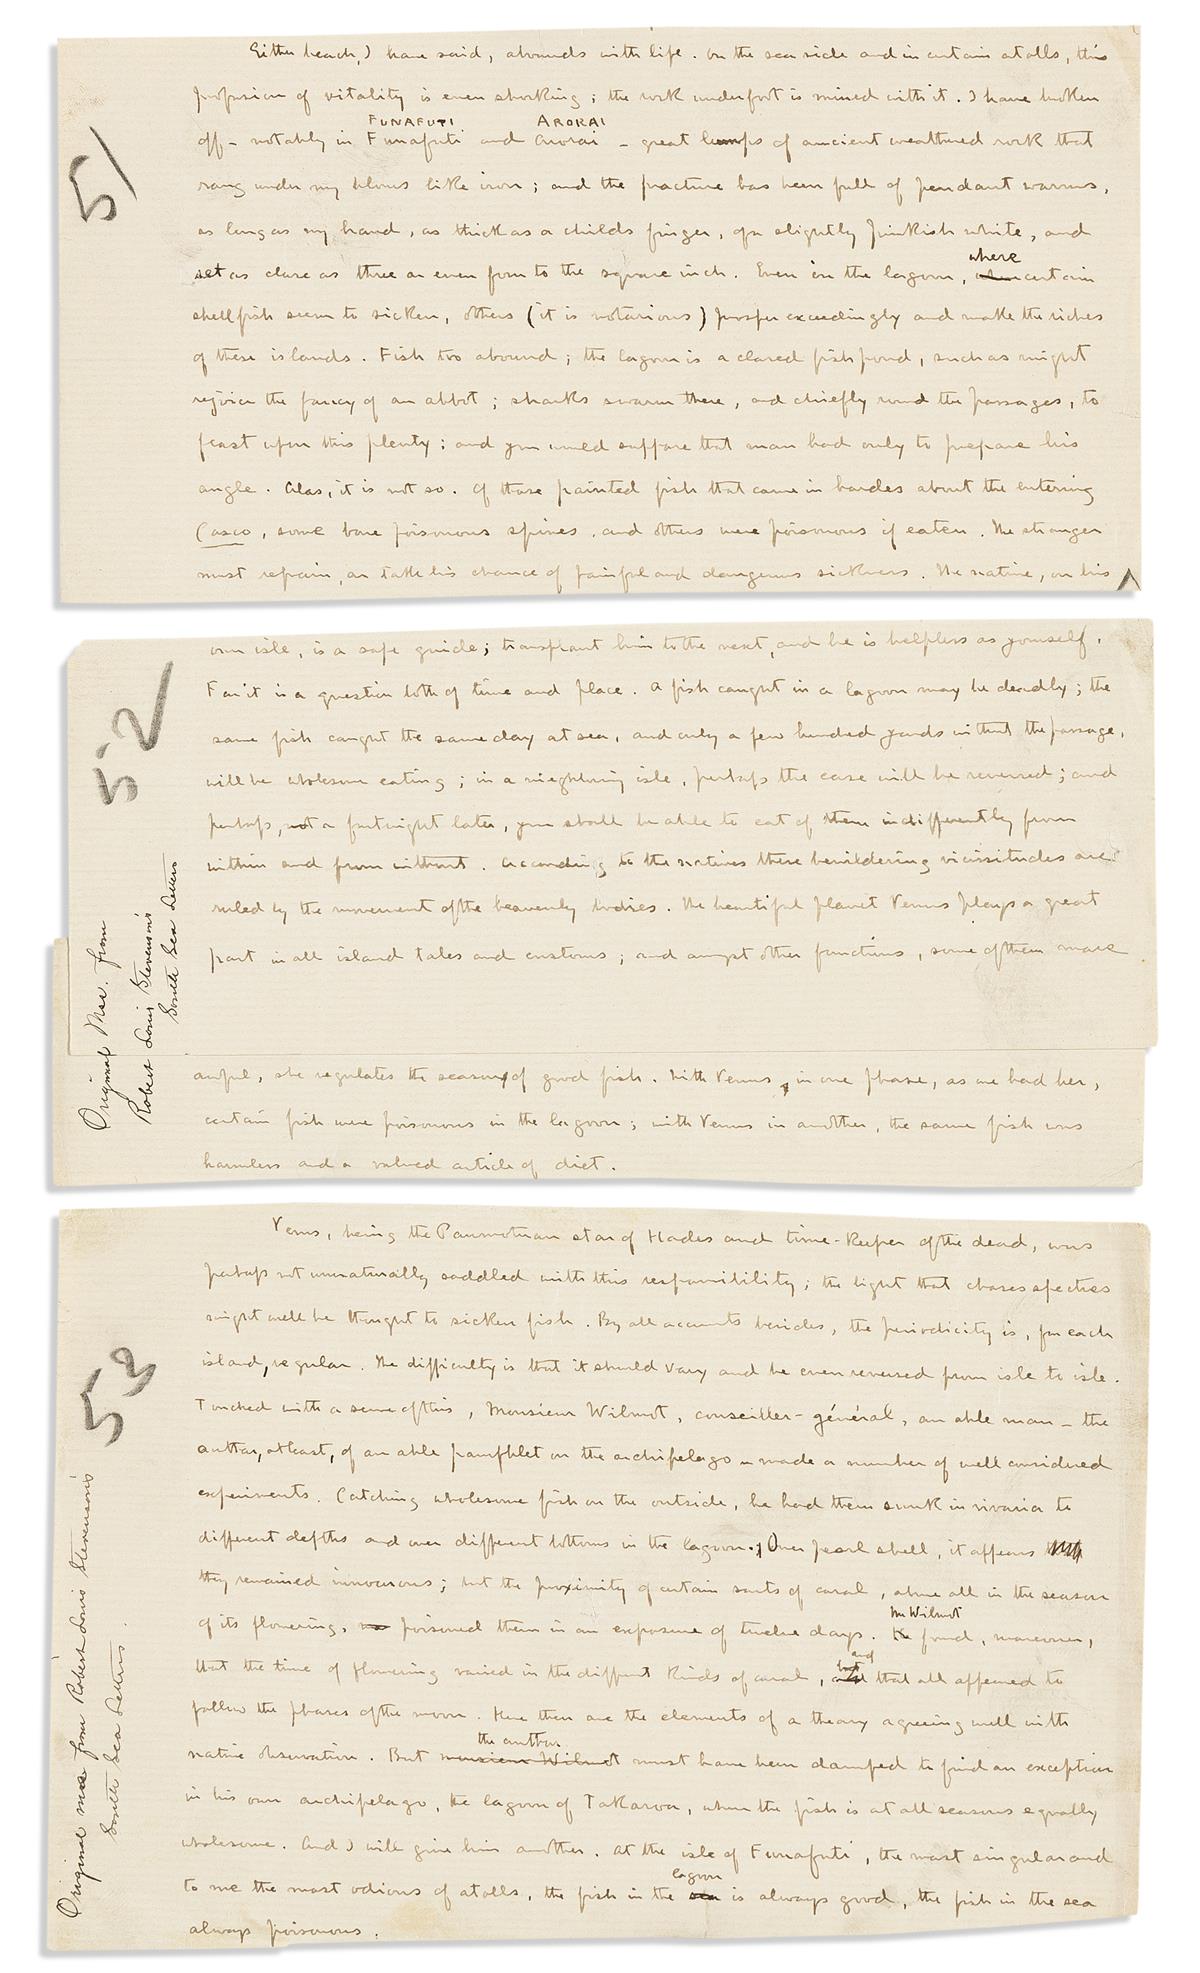 STEVENSON, ROBERT LOUIS. Autograph Manuscript, unsigned, 38-line fragment of original draft of South Sea Letters (first published seria